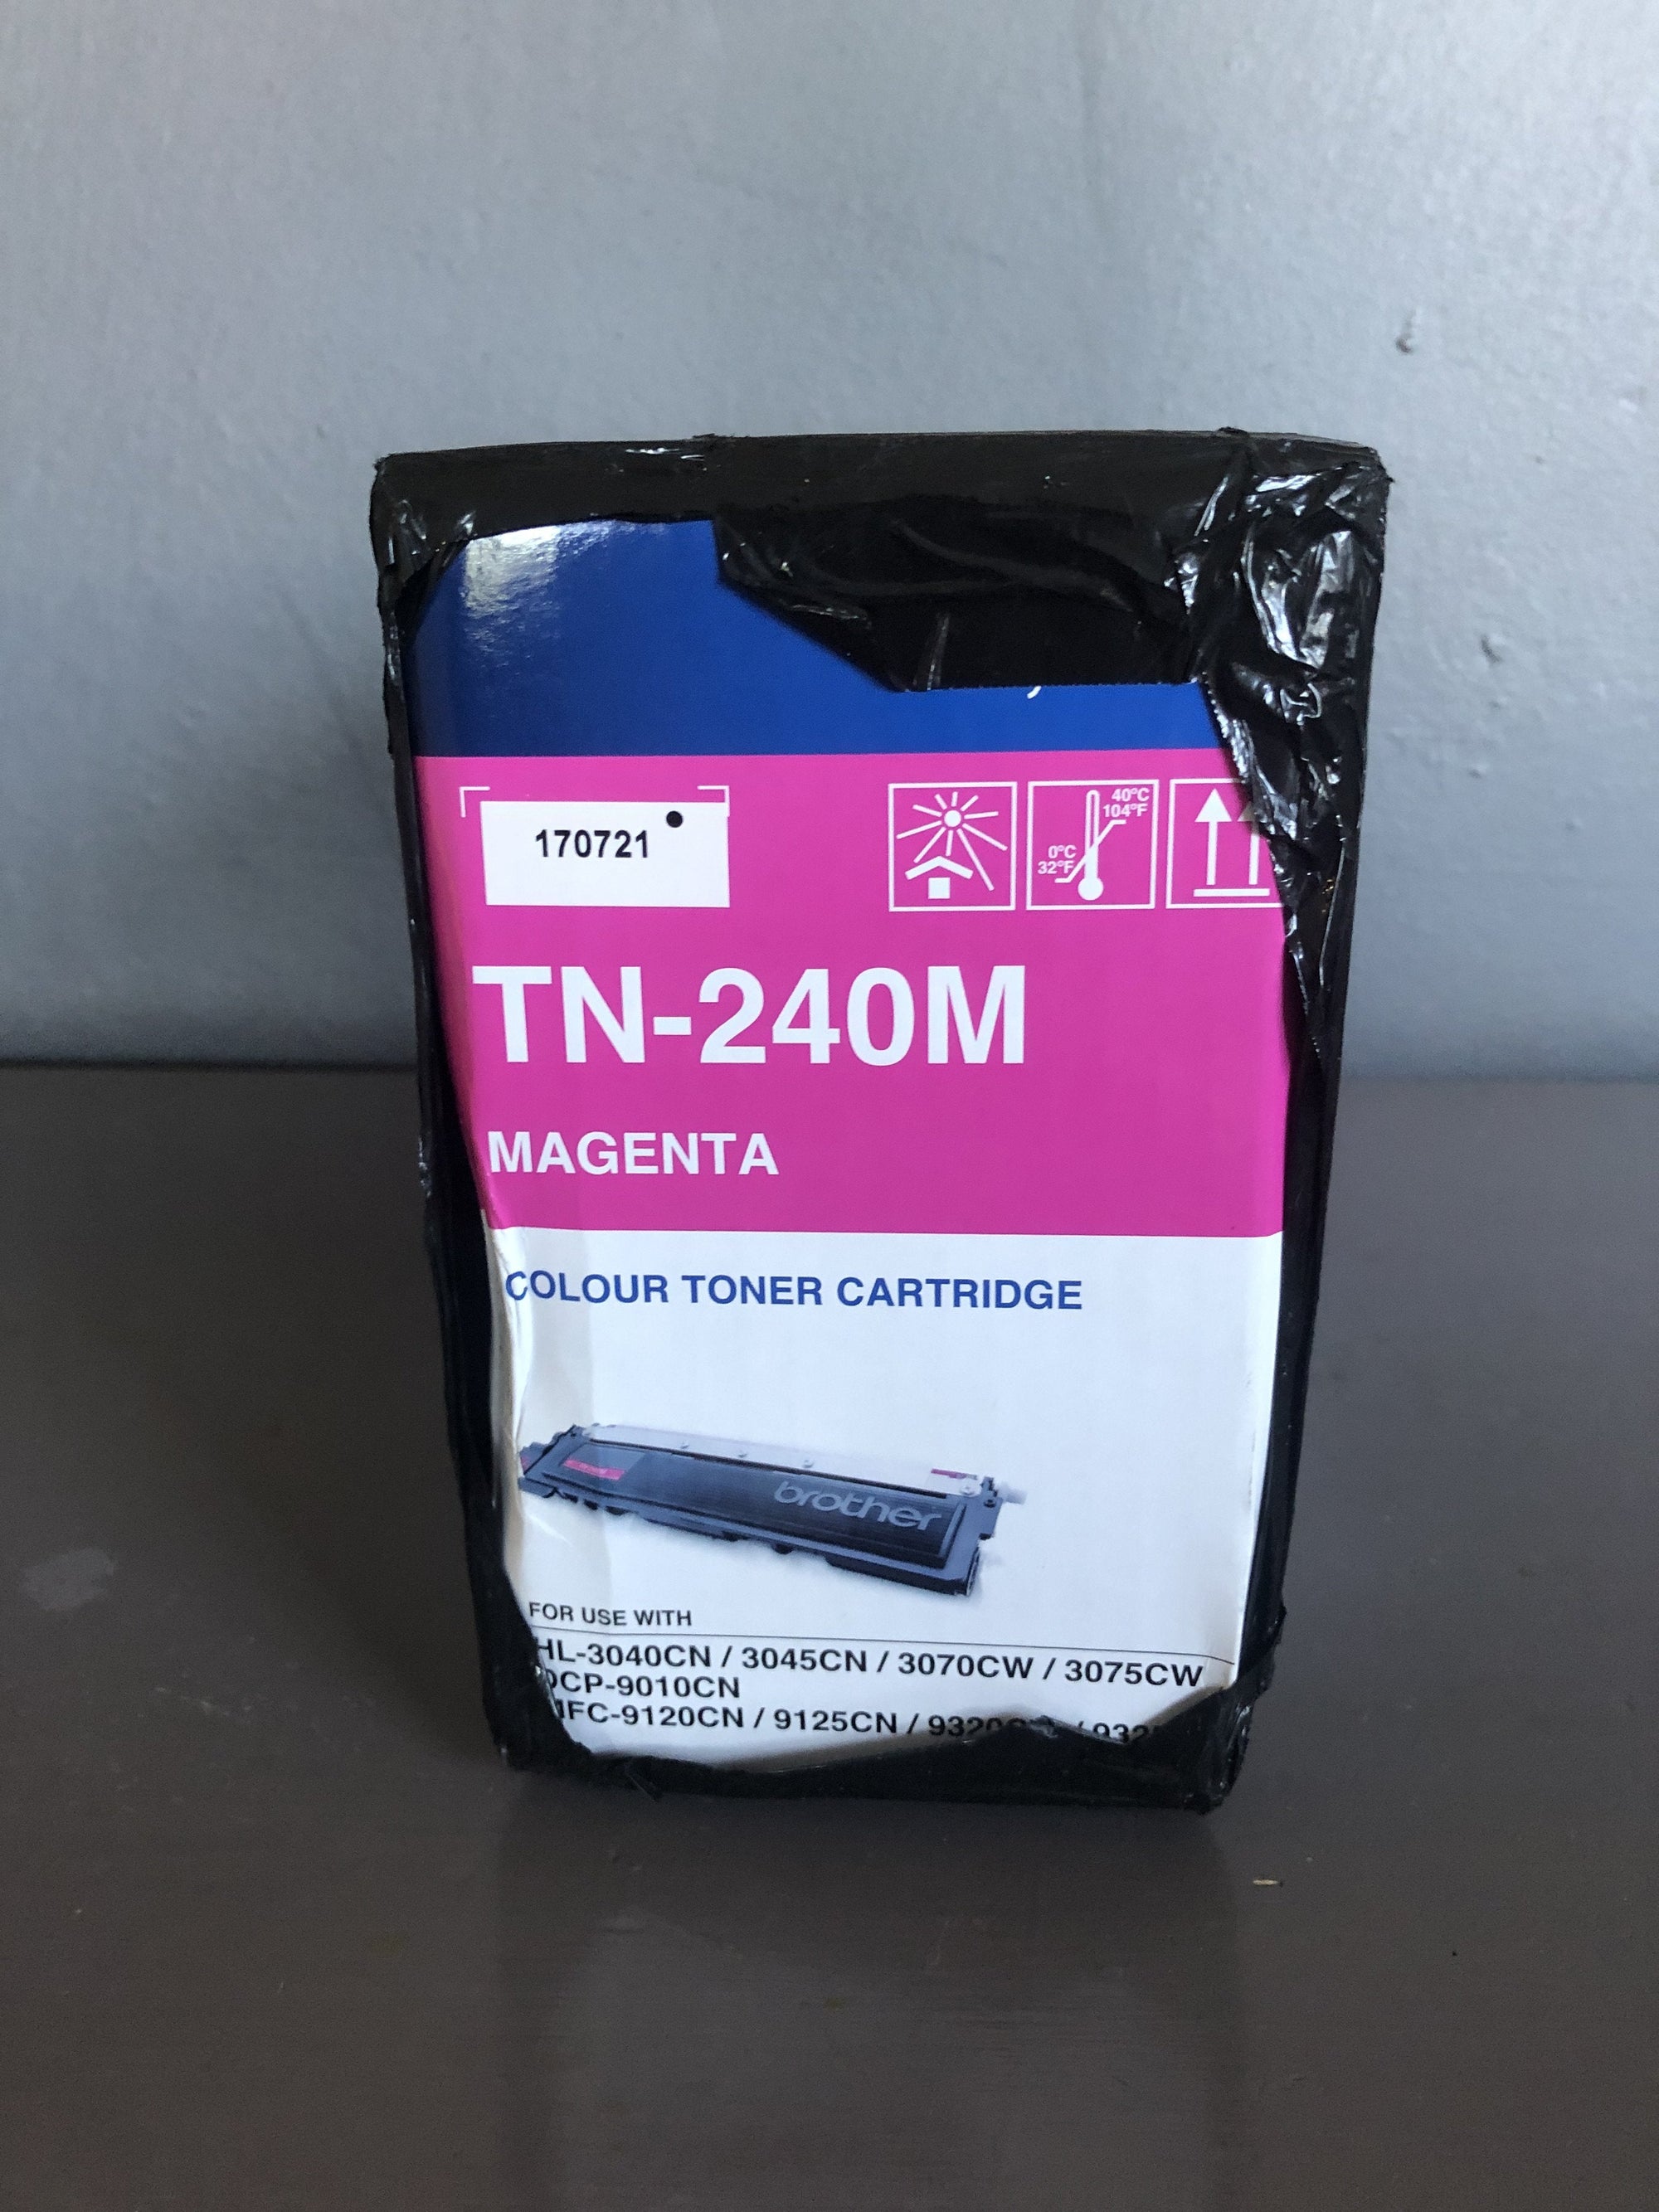 TN-240M Magenta Brother Laser Toner Cartridge - 2ndhandwarehouse.com